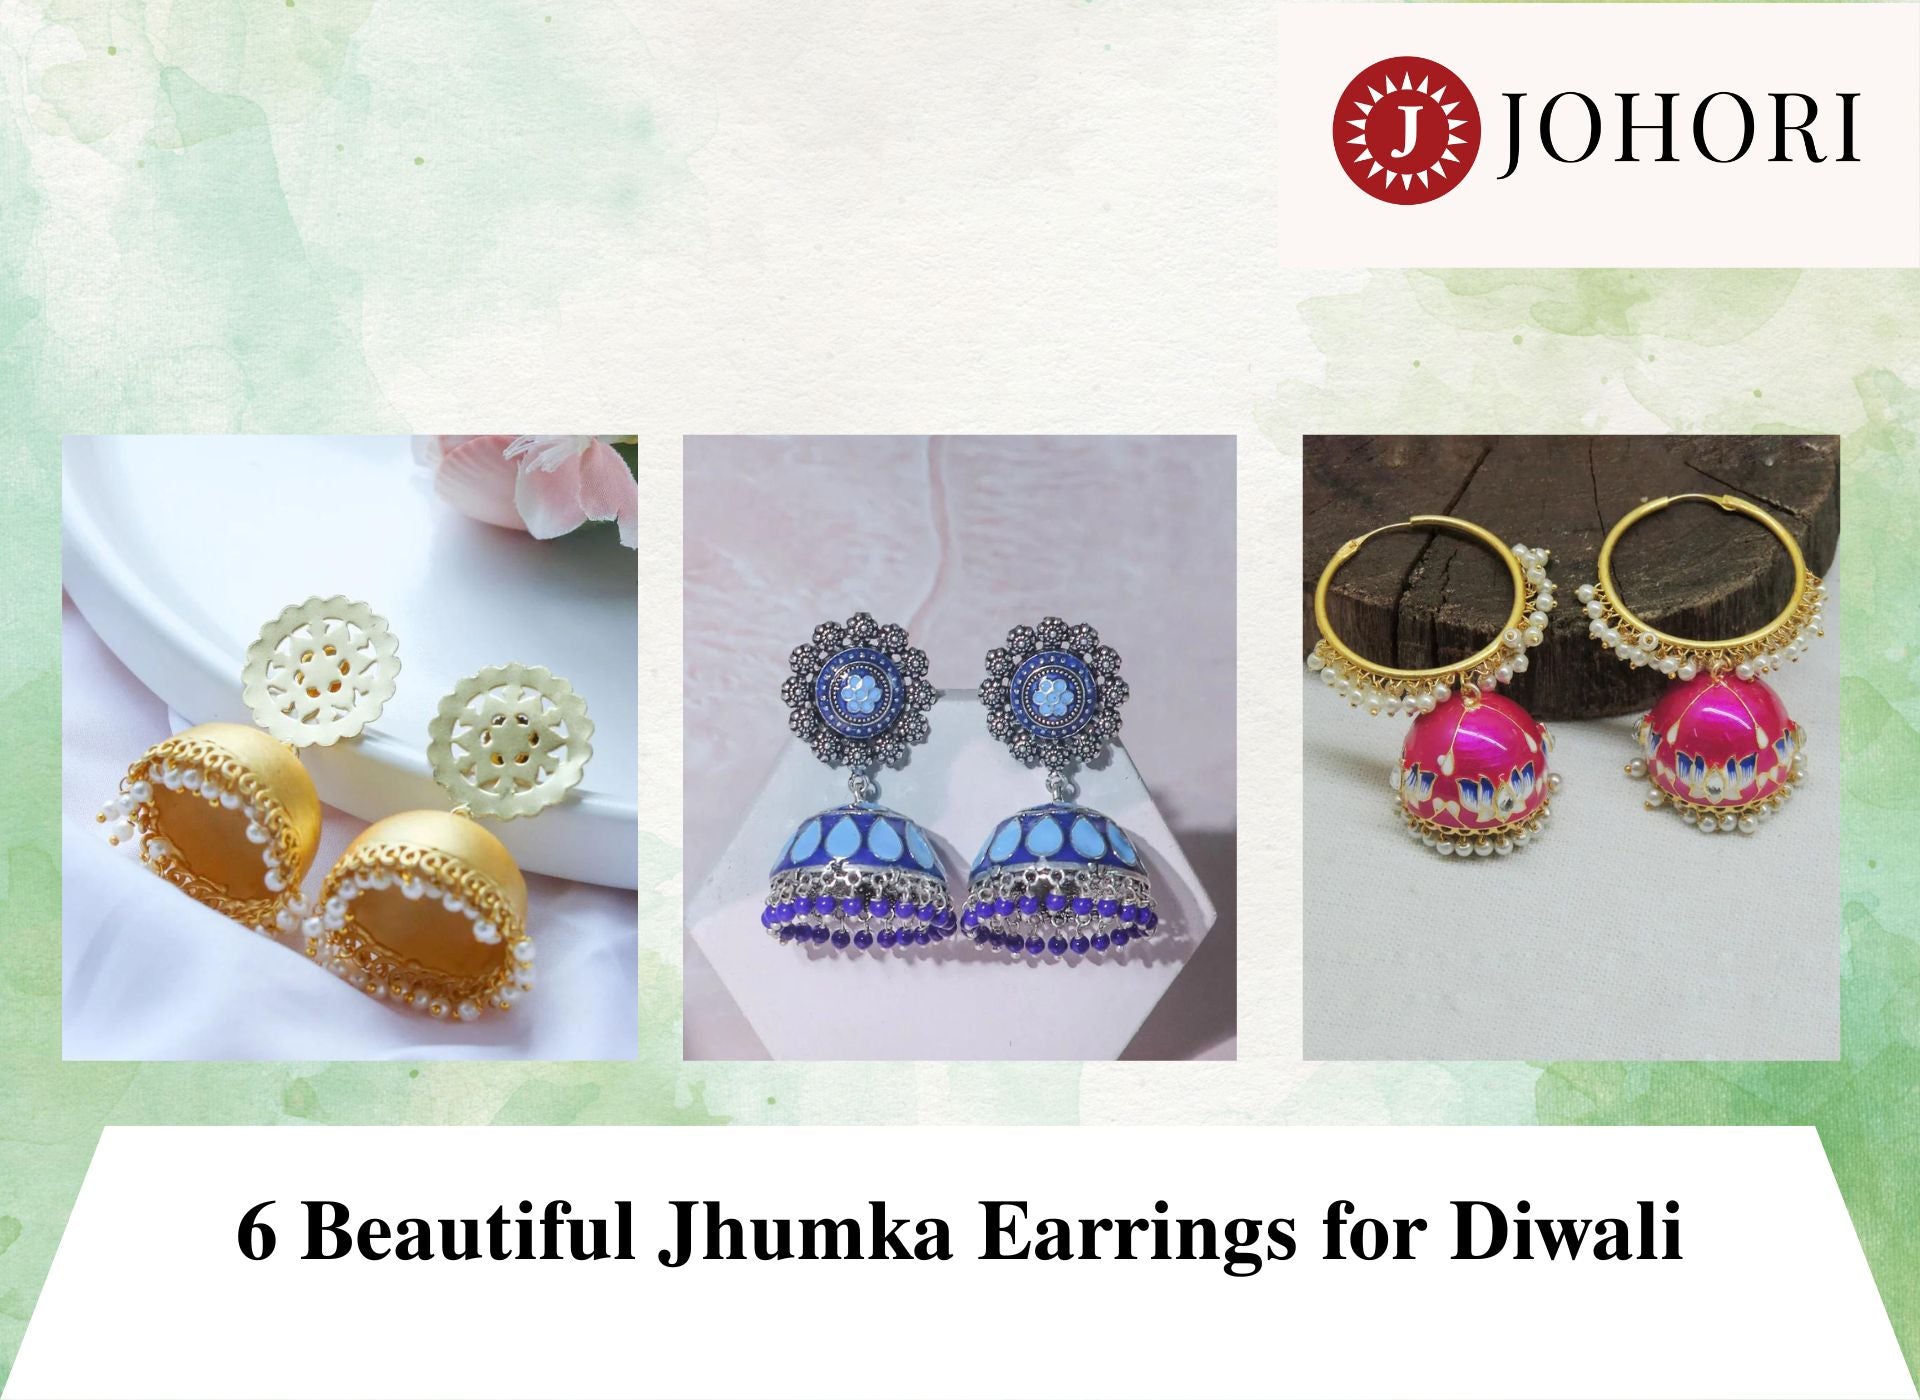 6 Beautiful Jhumka Earrings for Diwali